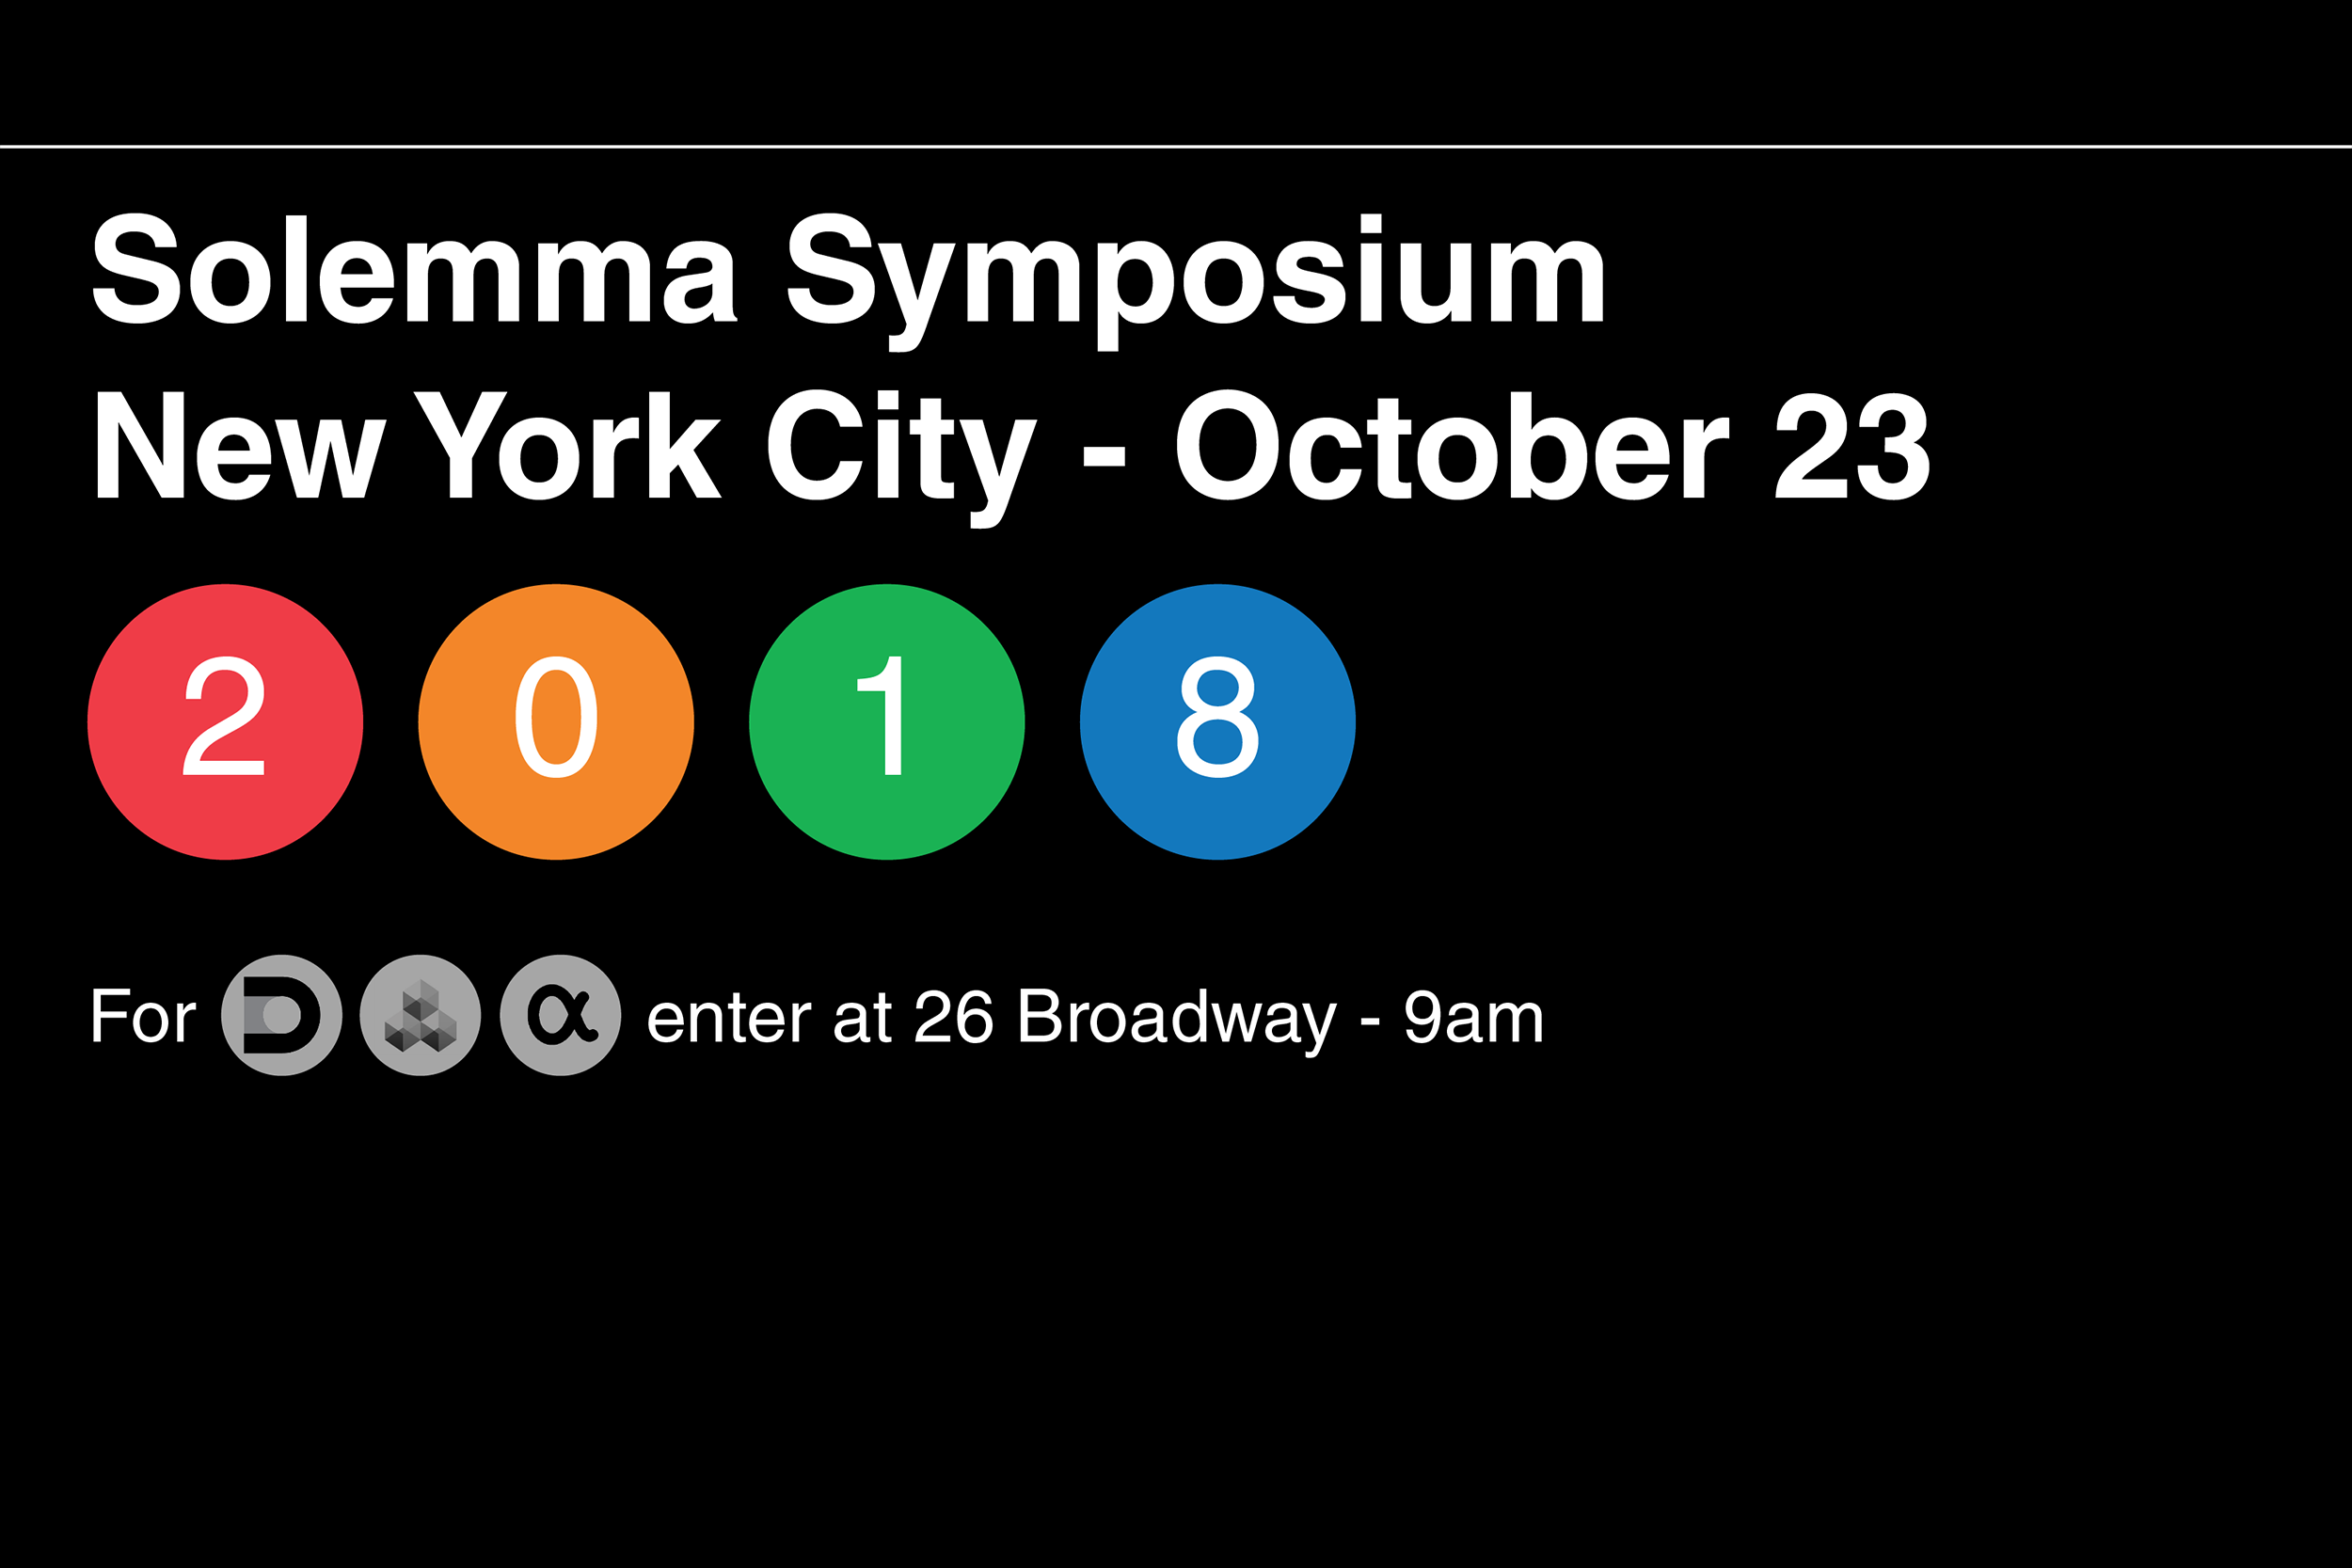 Solemma Symposium 2018, New York City